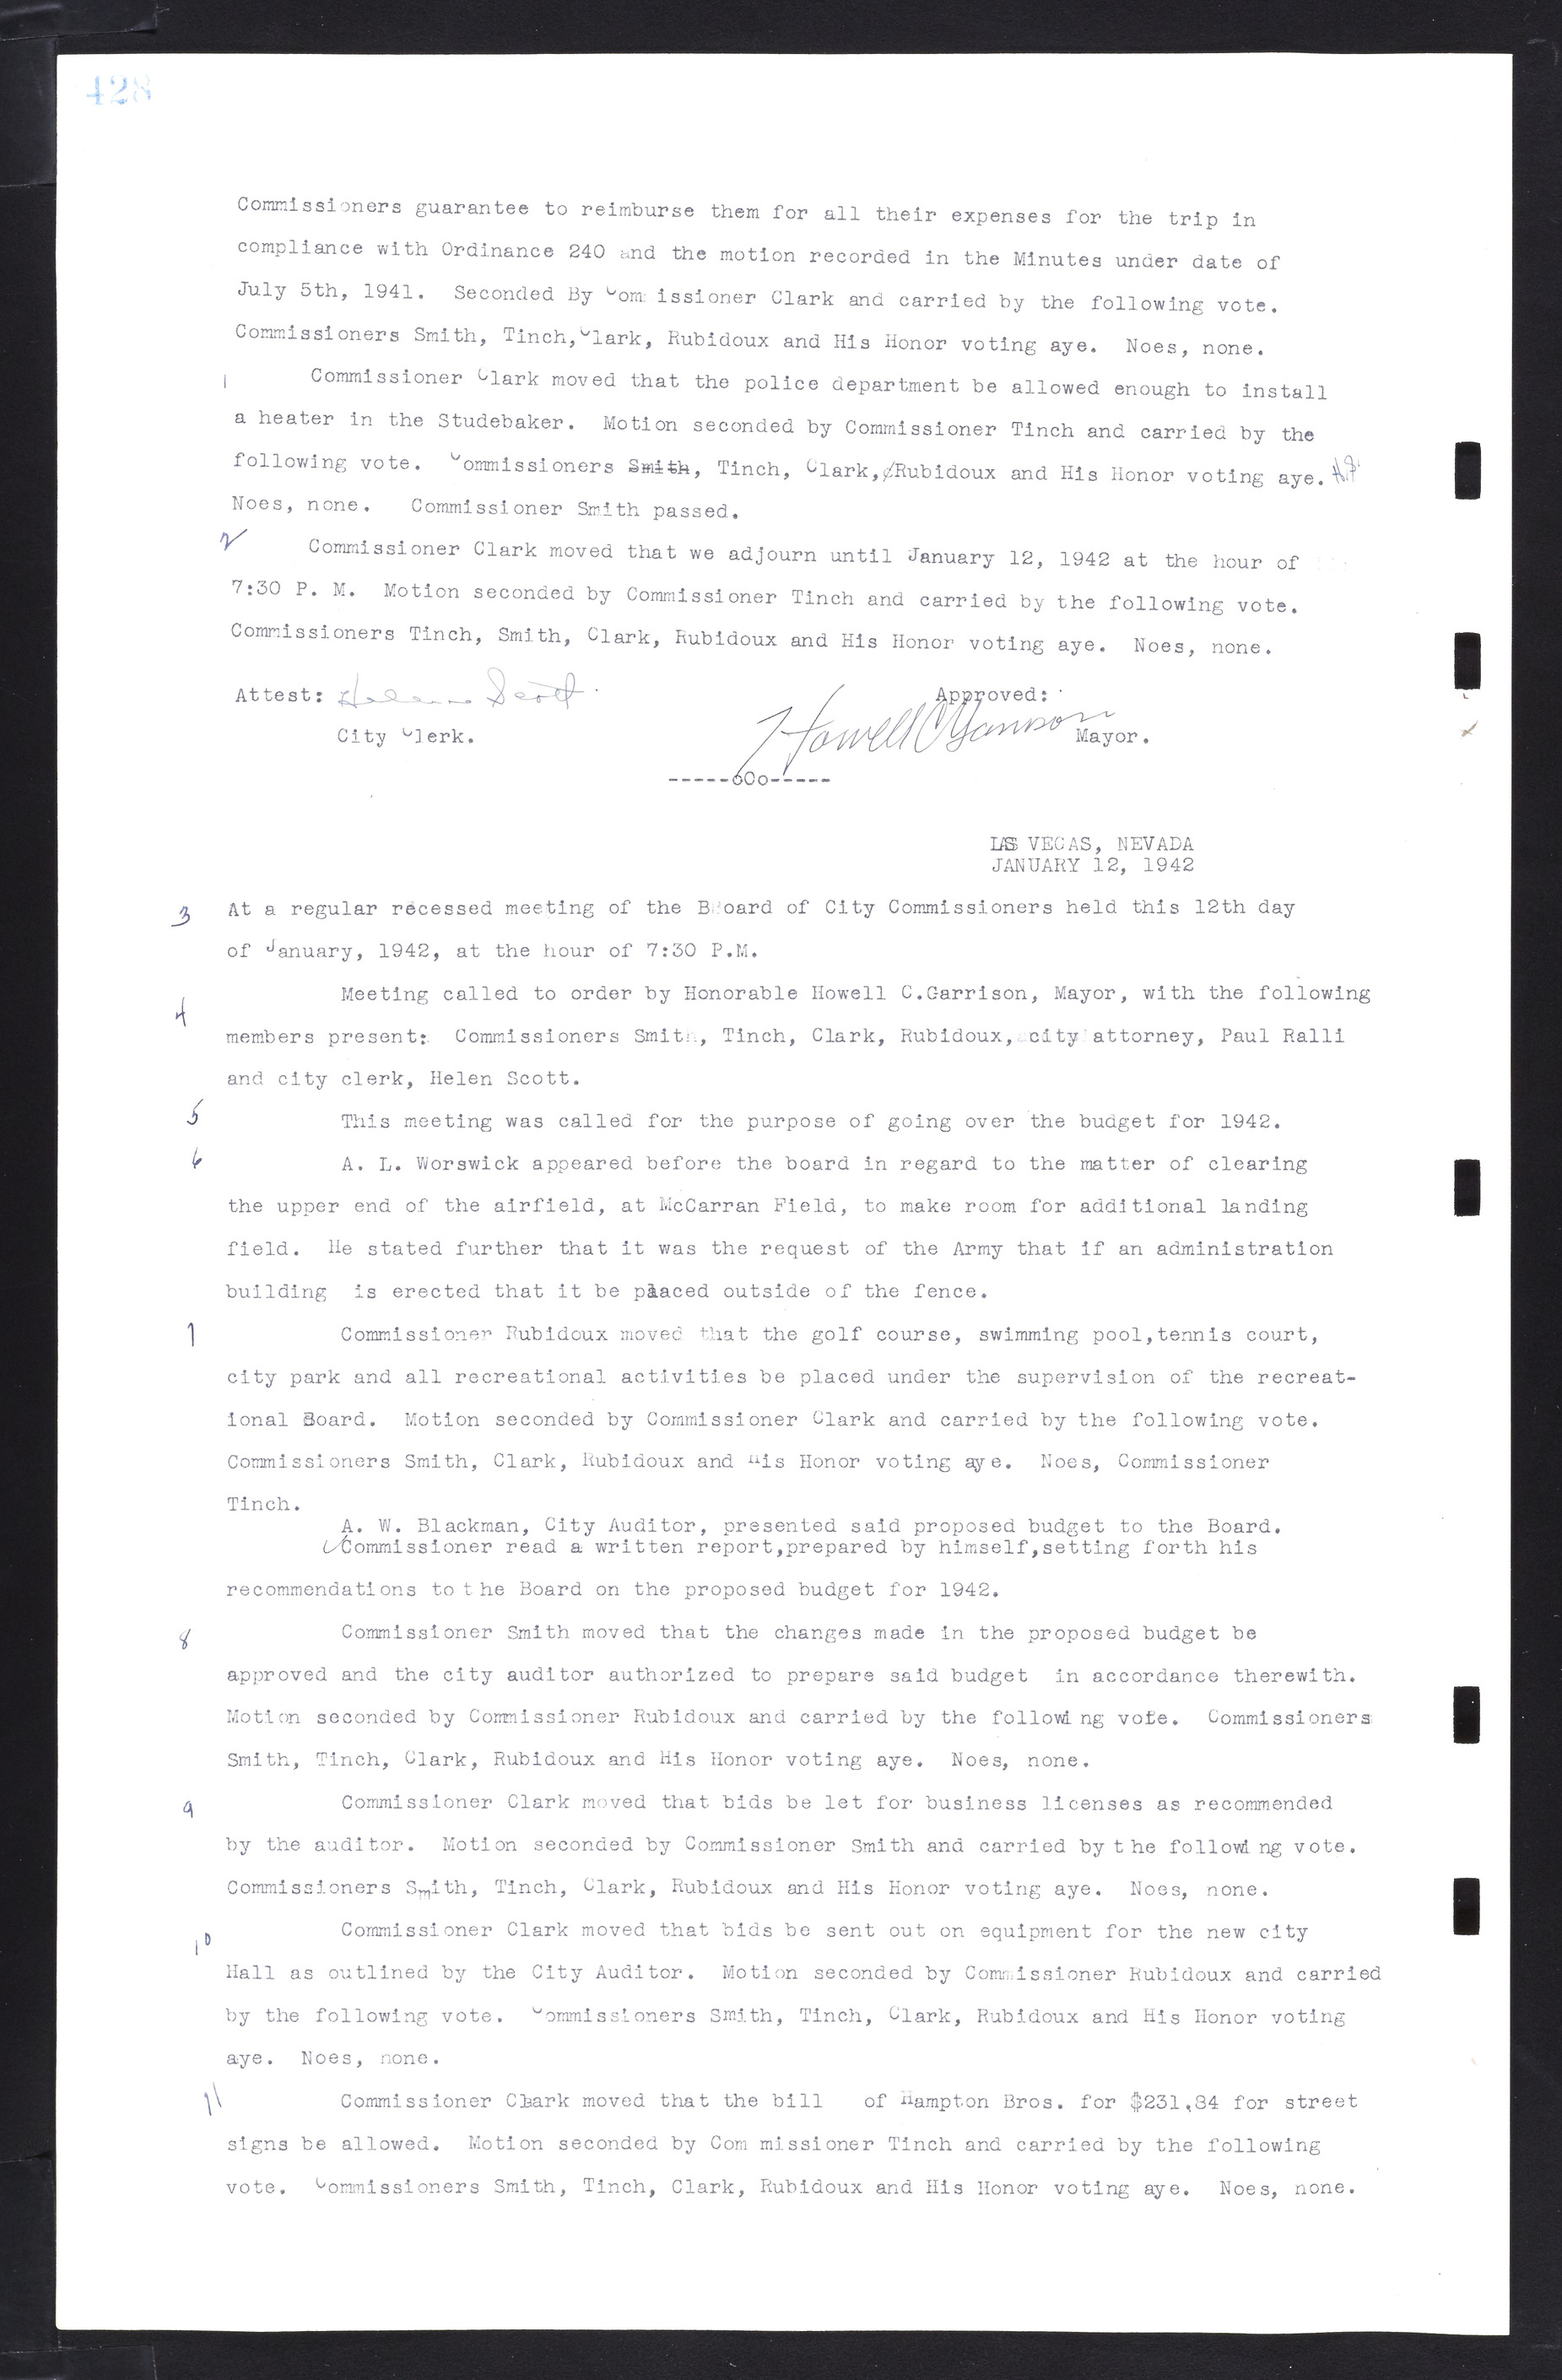 Las Vegas City Commission Minutes, February 17, 1937 to August 4, 1942, lvc000004-456